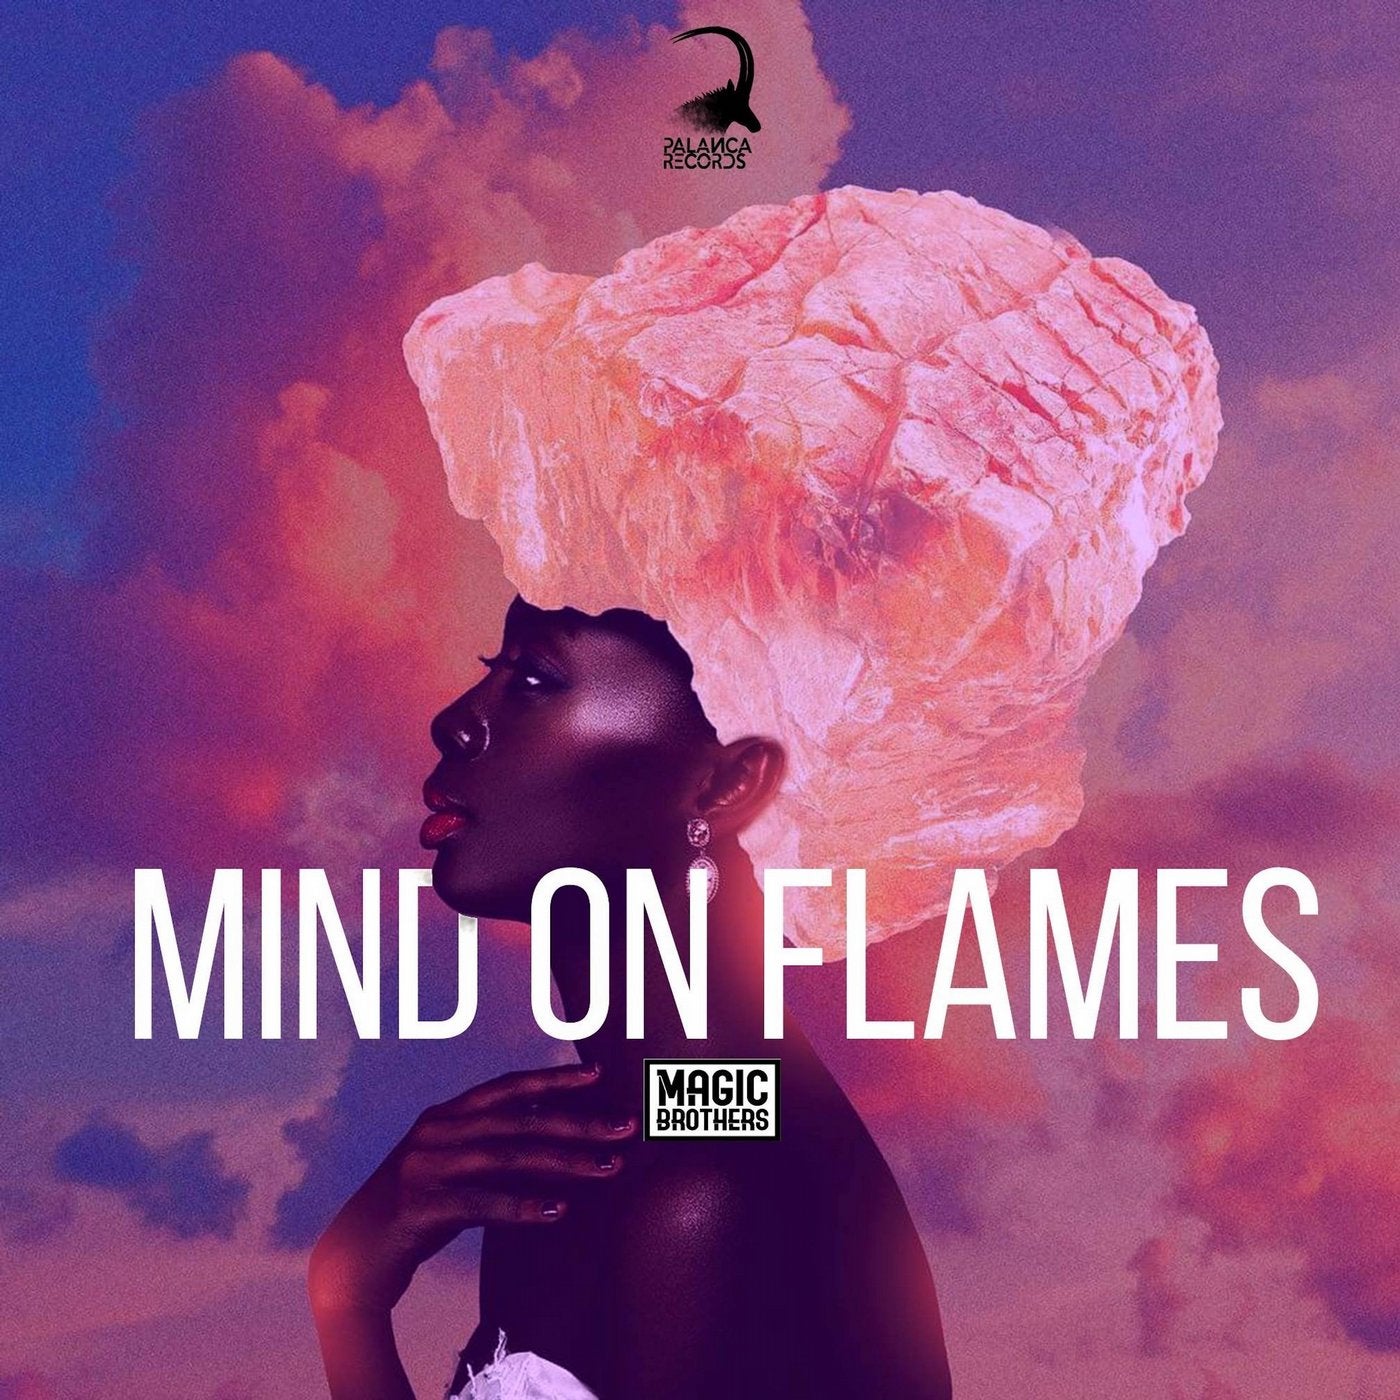 Mind on Flames